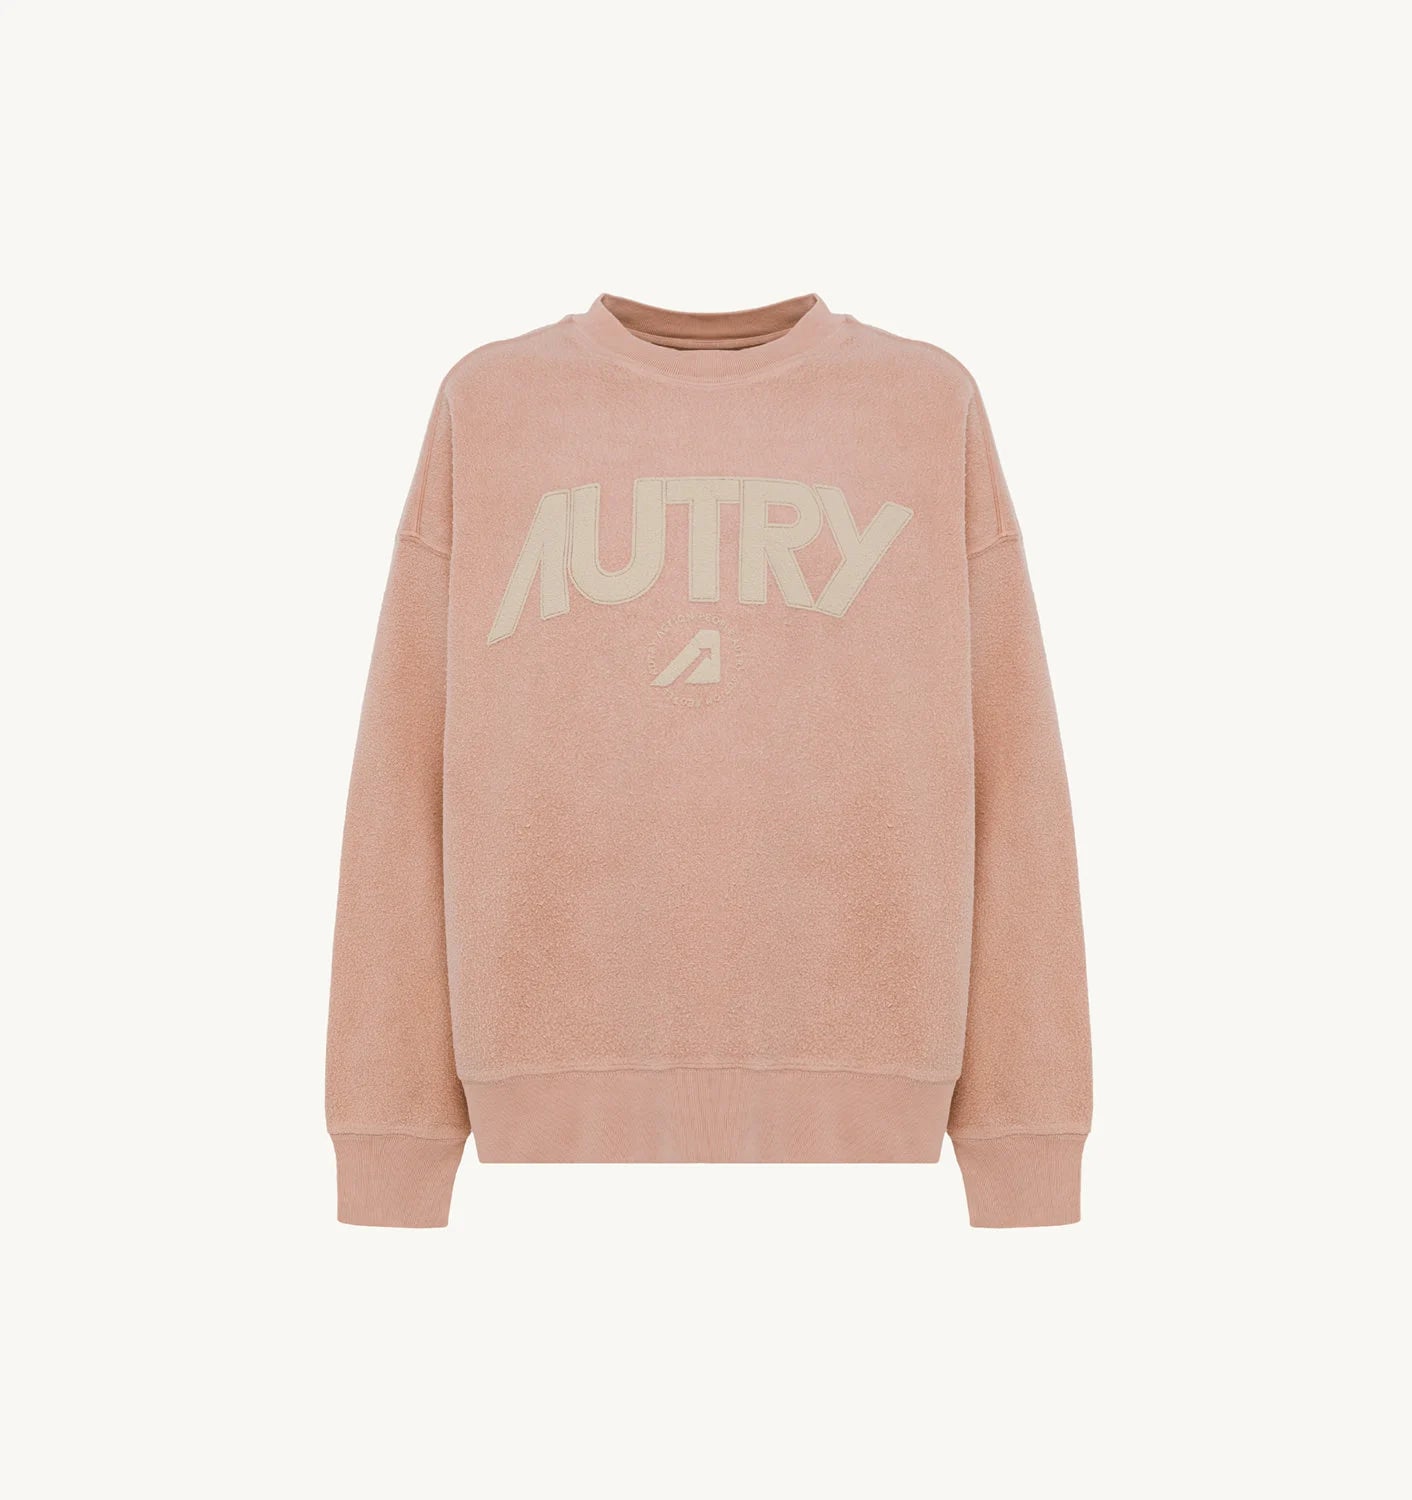 Autry Women's Sweatshirt Amour SWMW-448N Pink